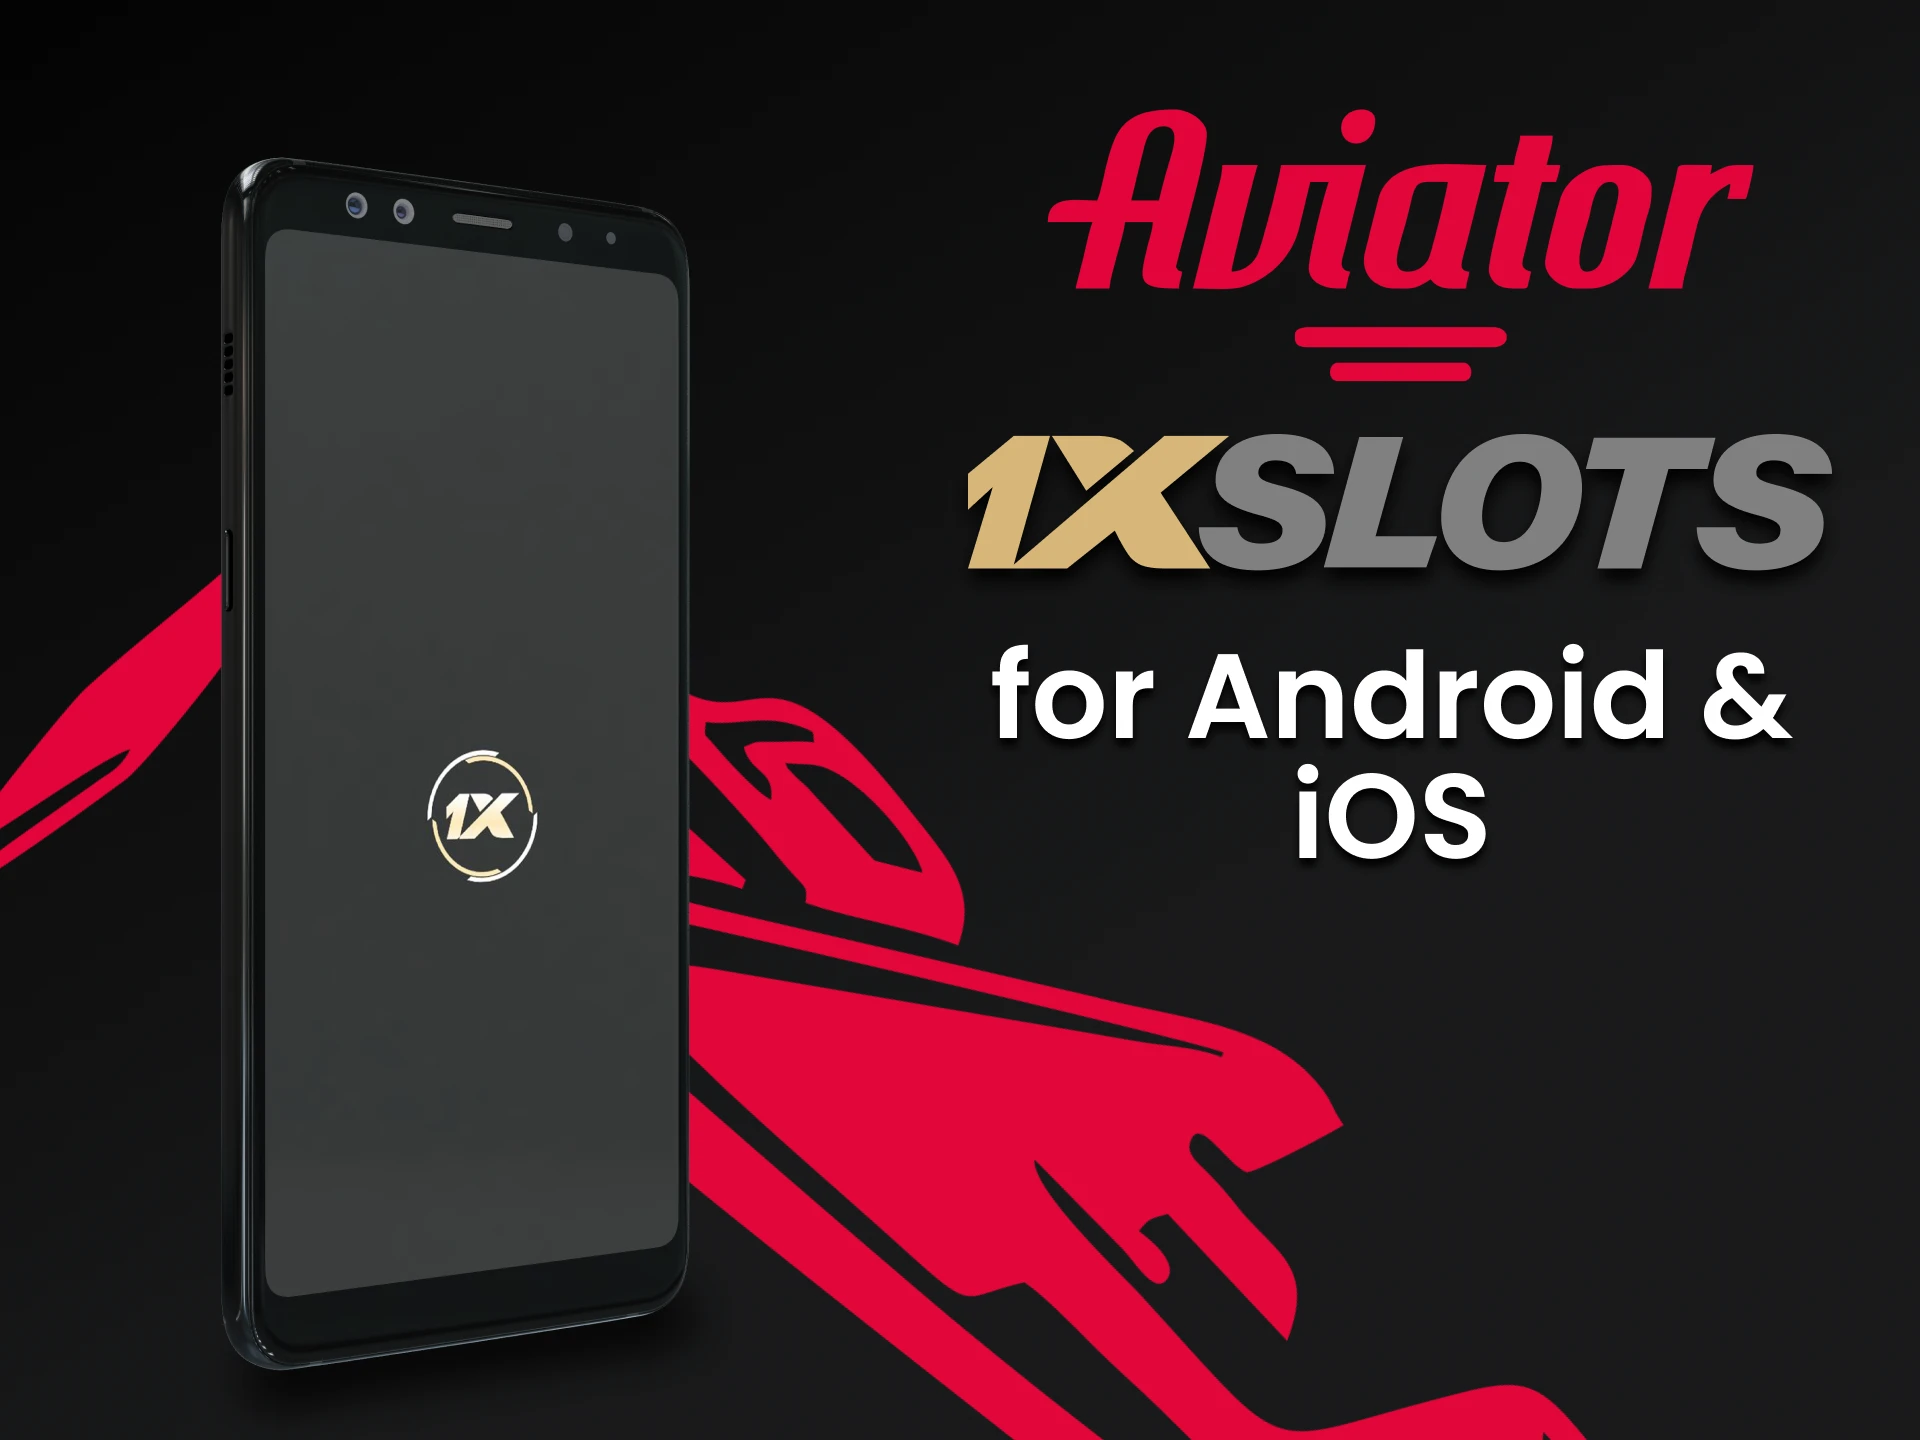 Play Aviator through the 1xslots application.